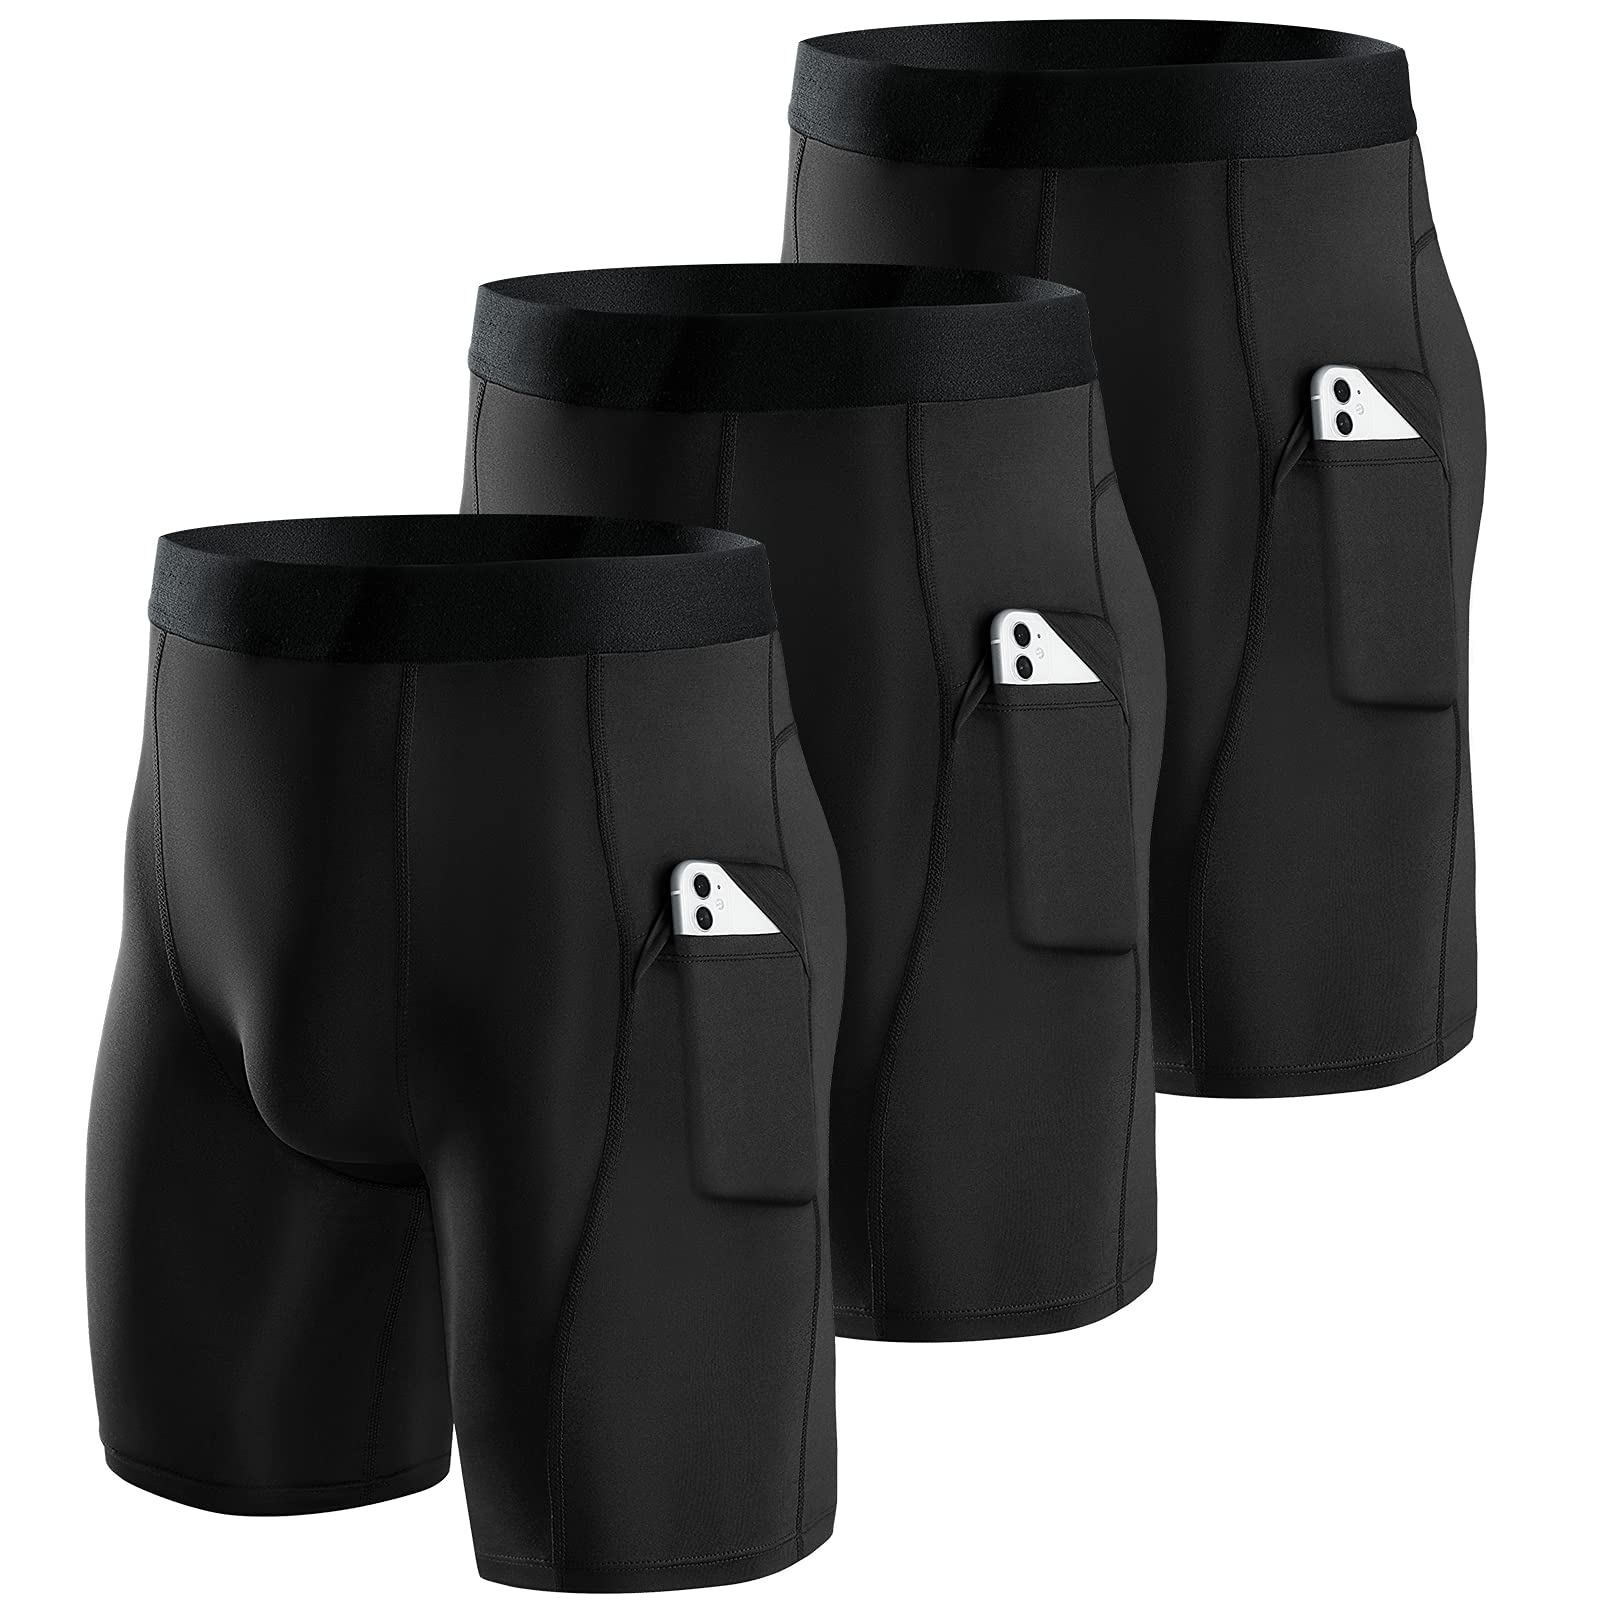 NIKSA performance compression athletic shorts 10